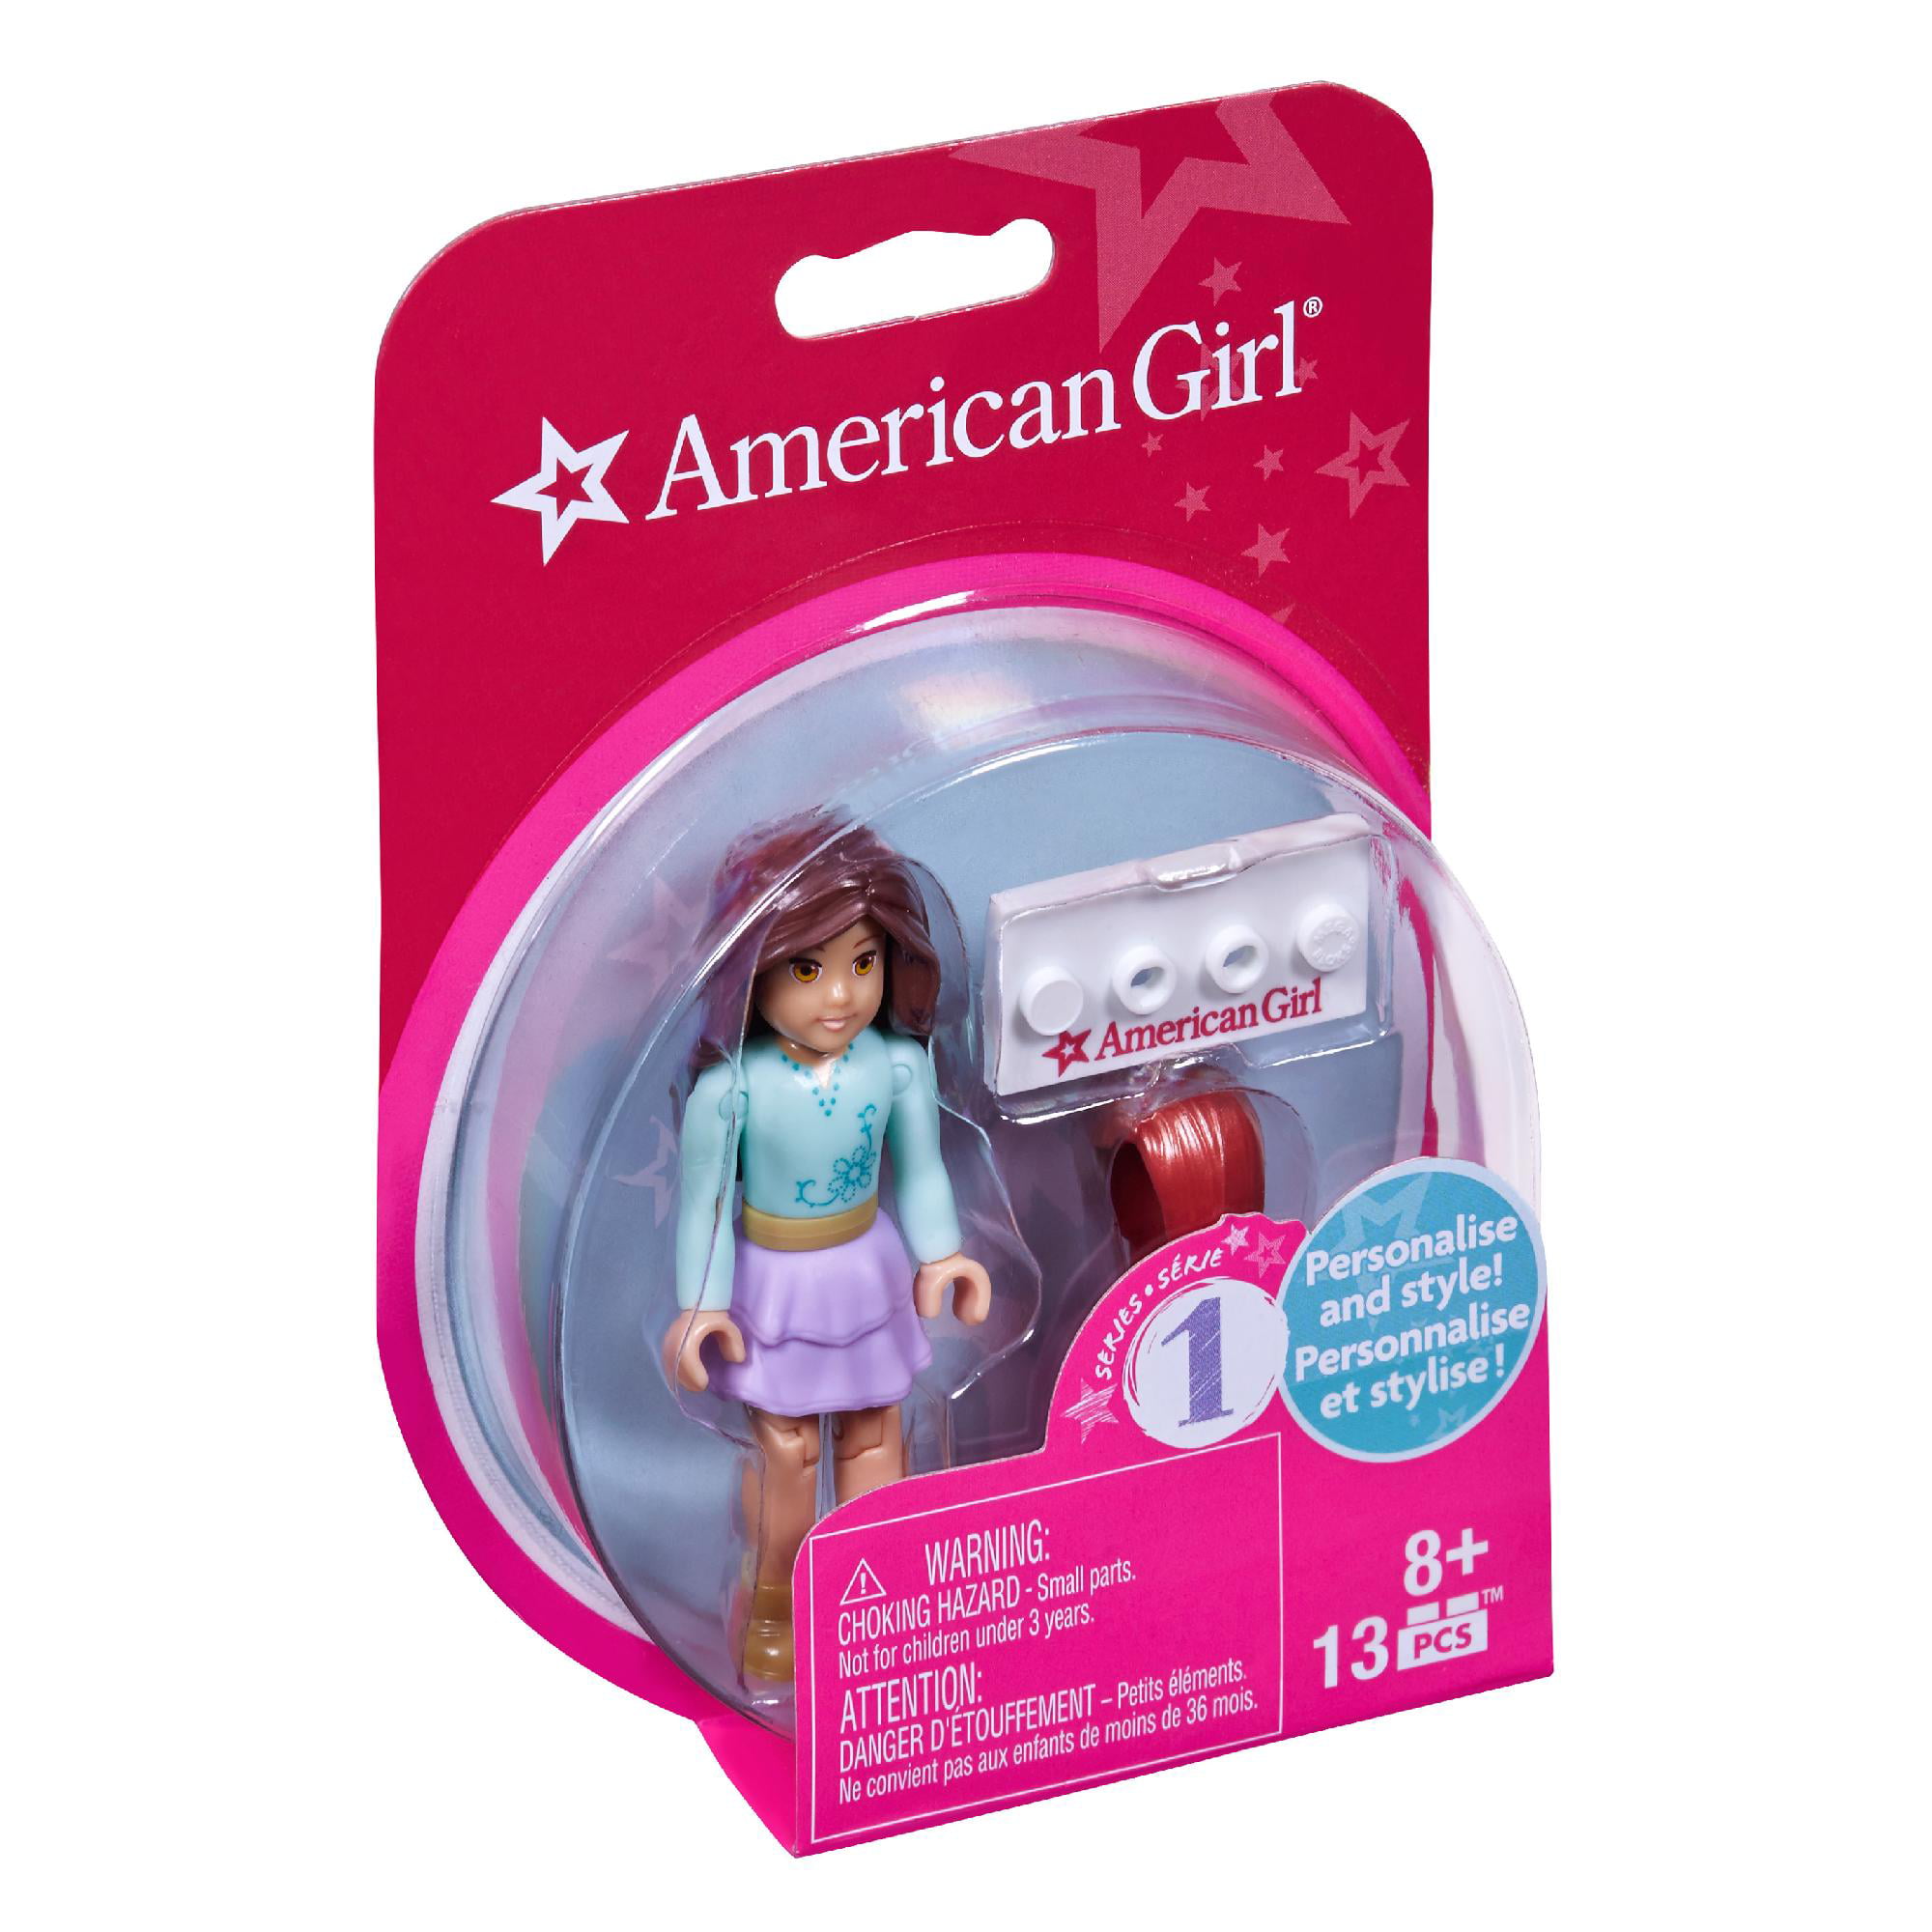 Toys Figures Mega Chαrizard X 3 Figure Toys for Kids Girls Boys